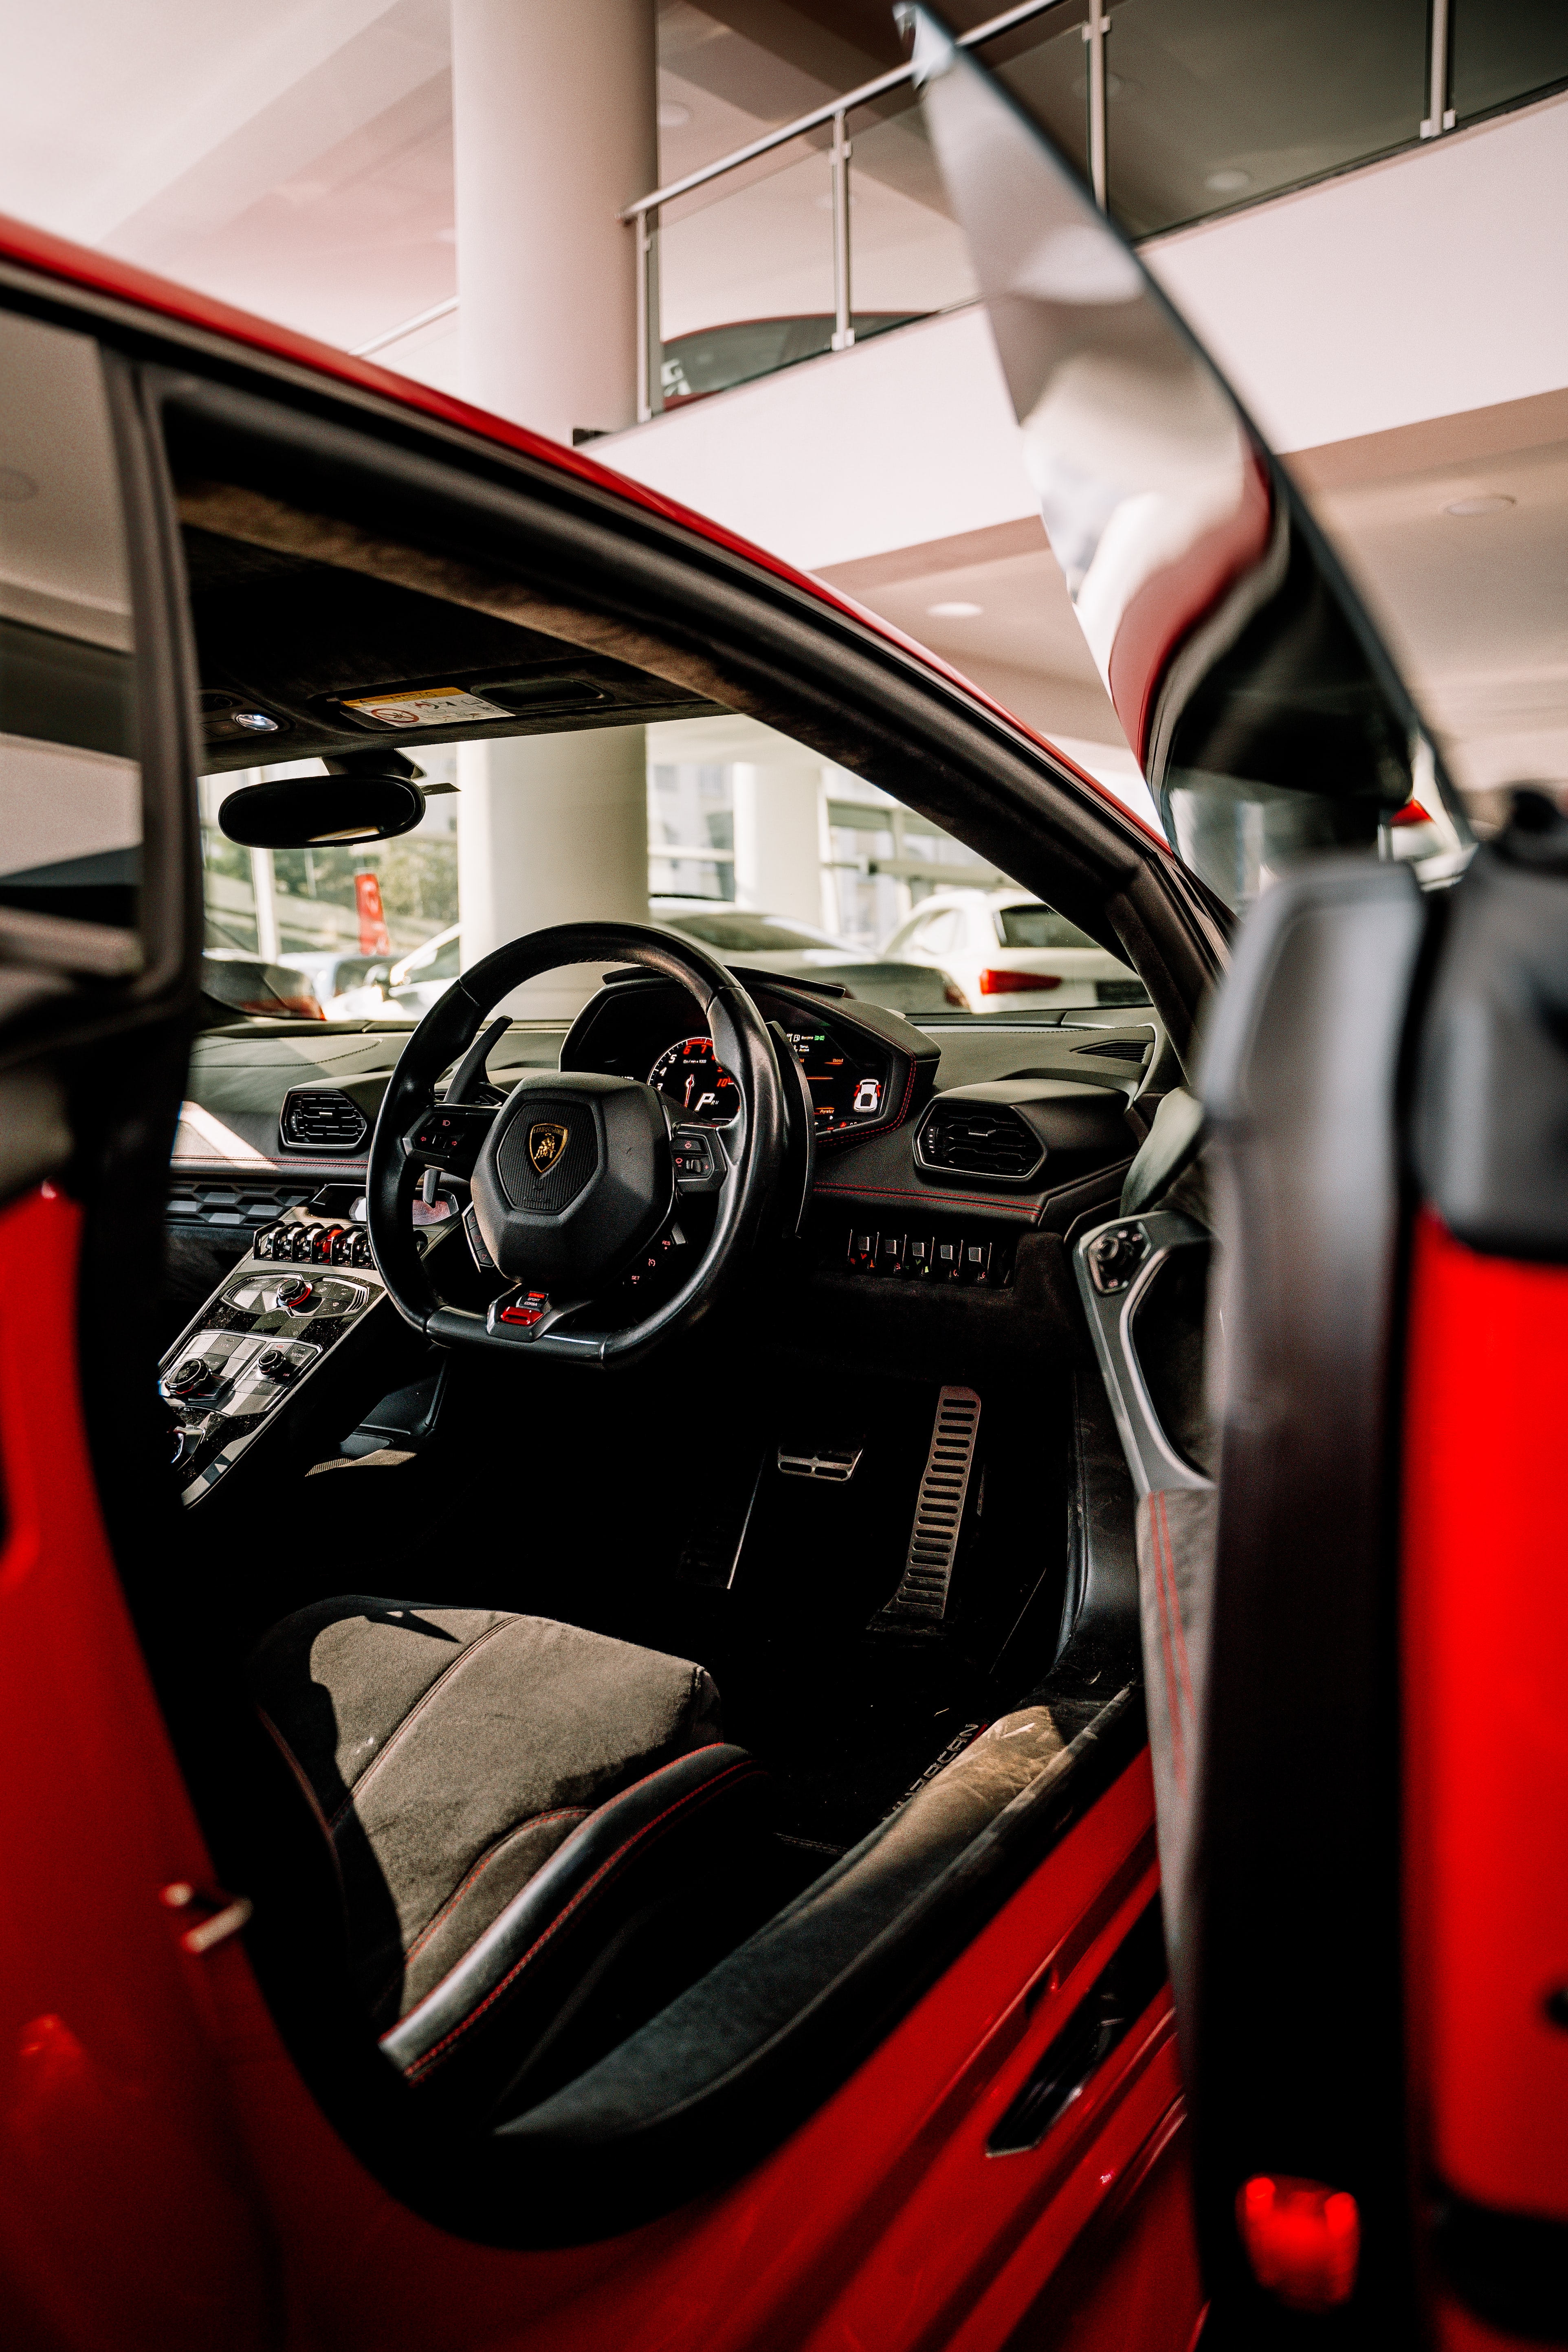 101749 Заставки и Обои Ламборджини (Lamborghini) на телефон. Скачать салон, руль, тачки (cars), автомобиль картинки бесплатно